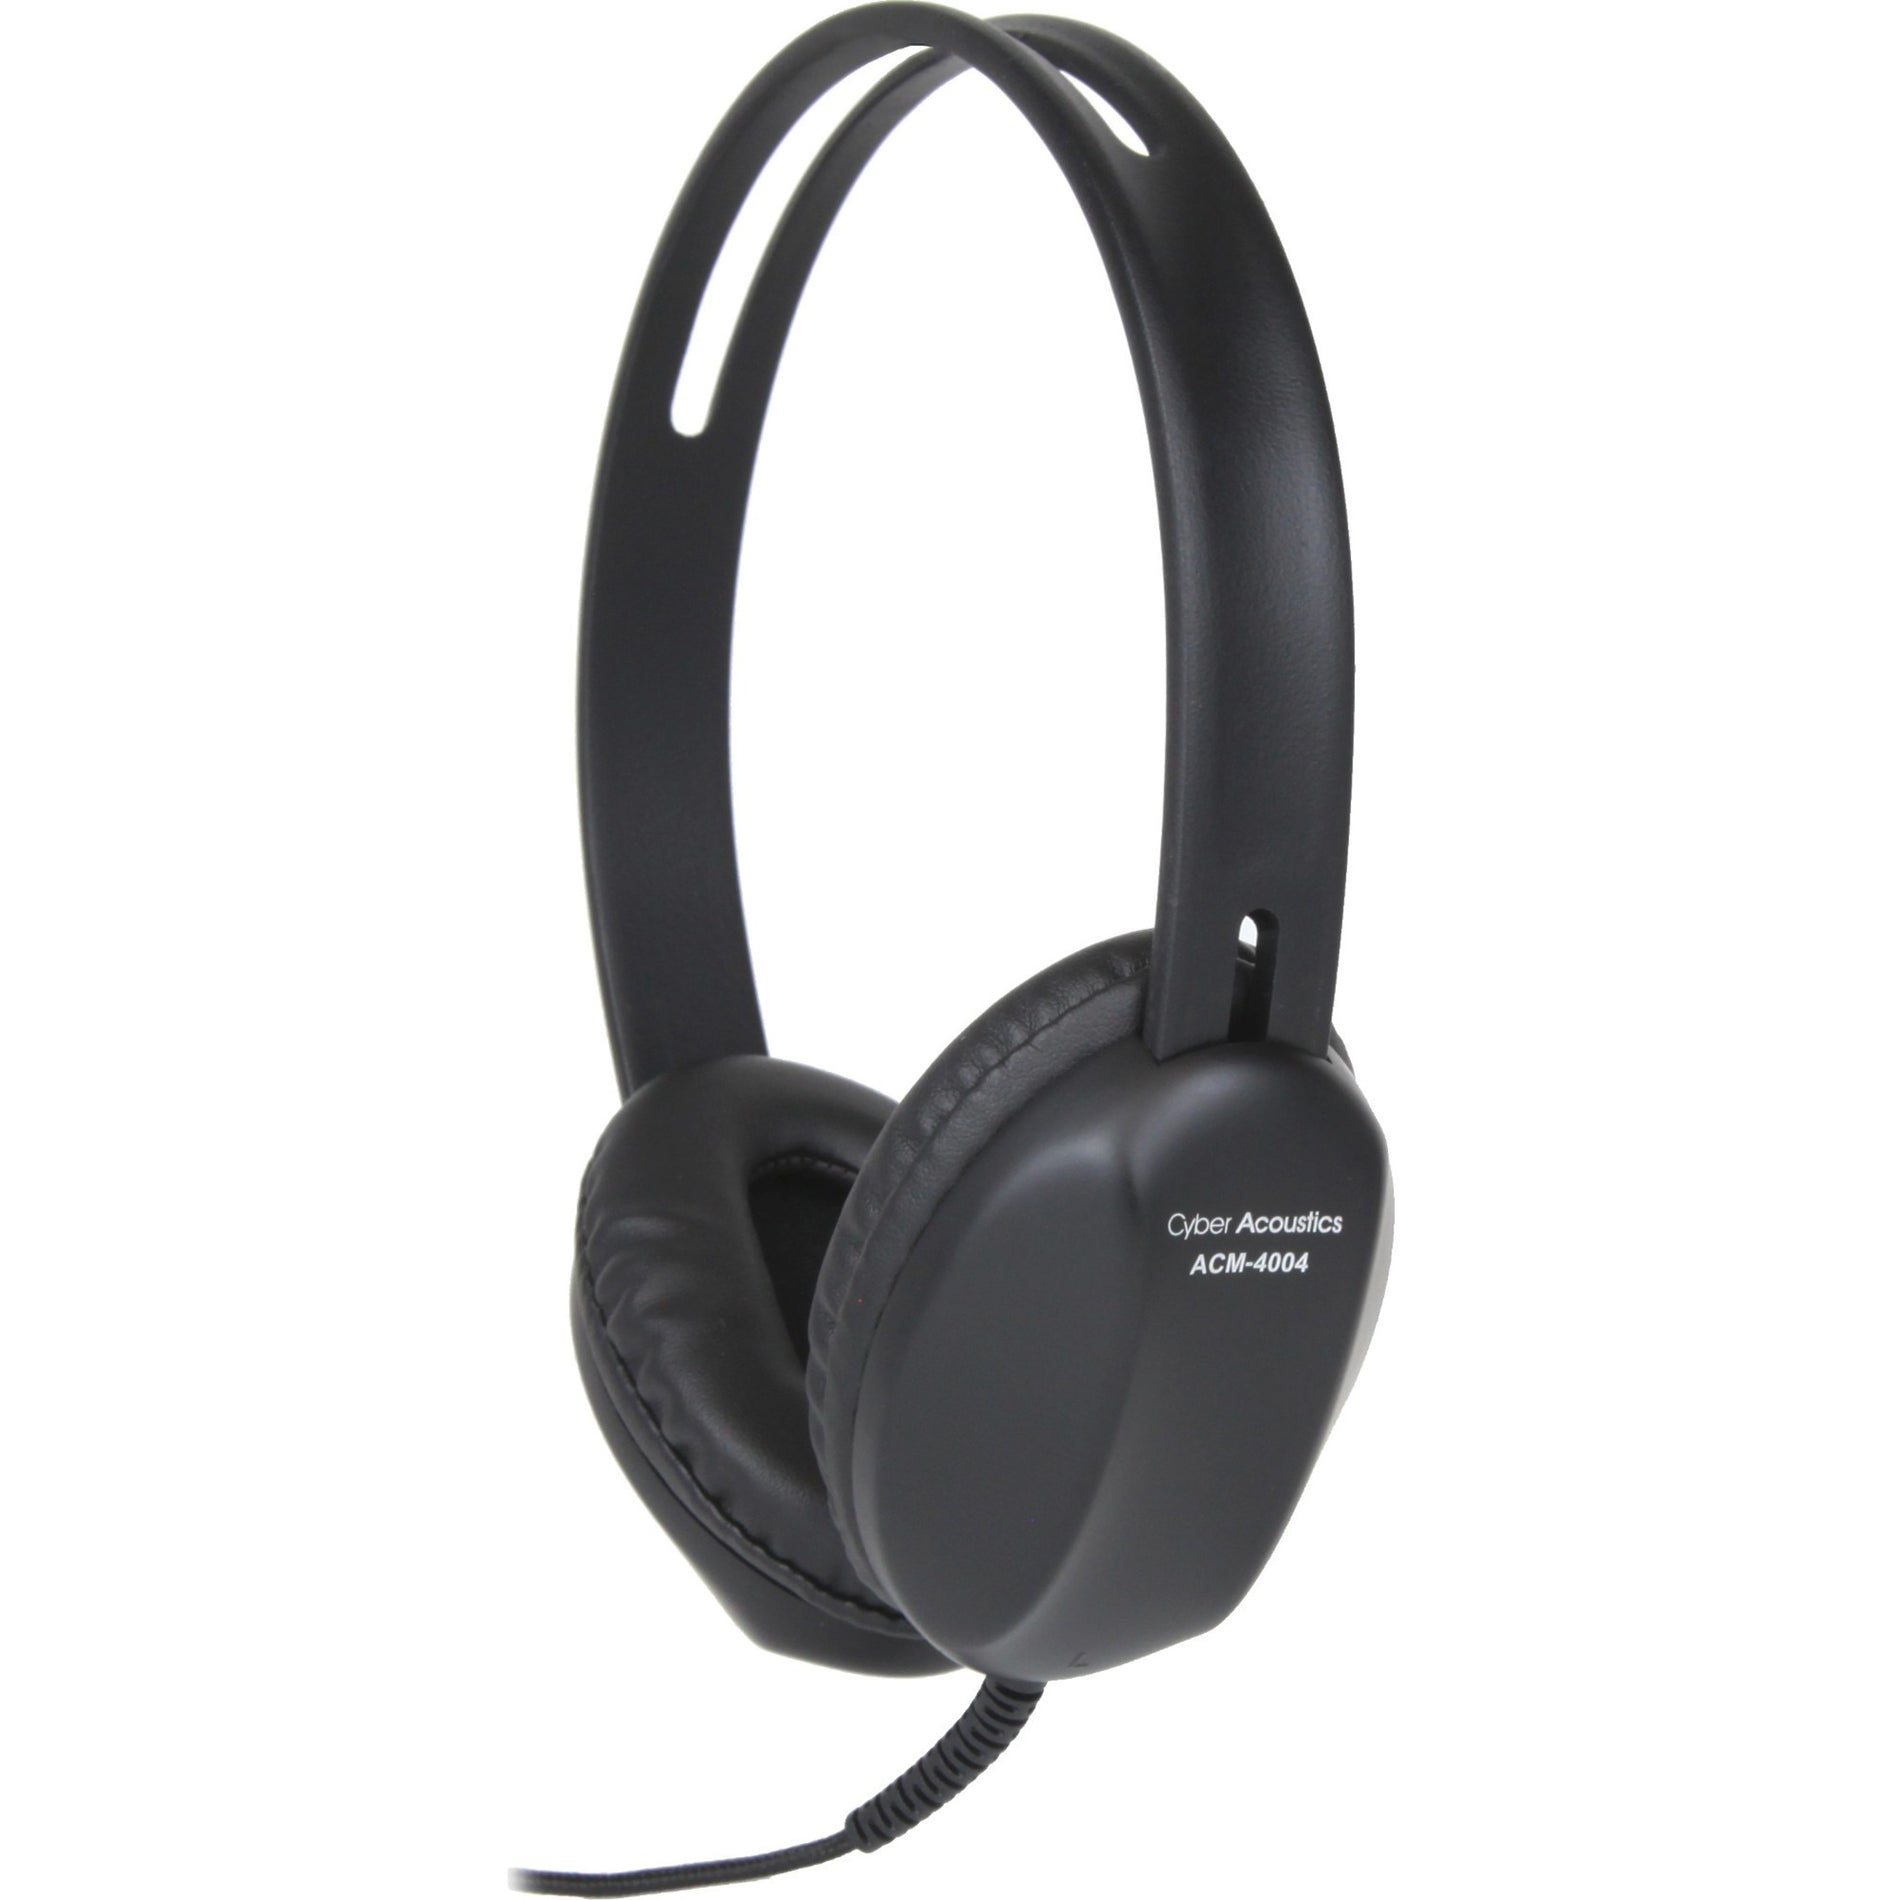 Cyber Acoustics ACM-4004 Stereo Headphone, Adjustable Headband, Durable, Binaural Over-the-head Design